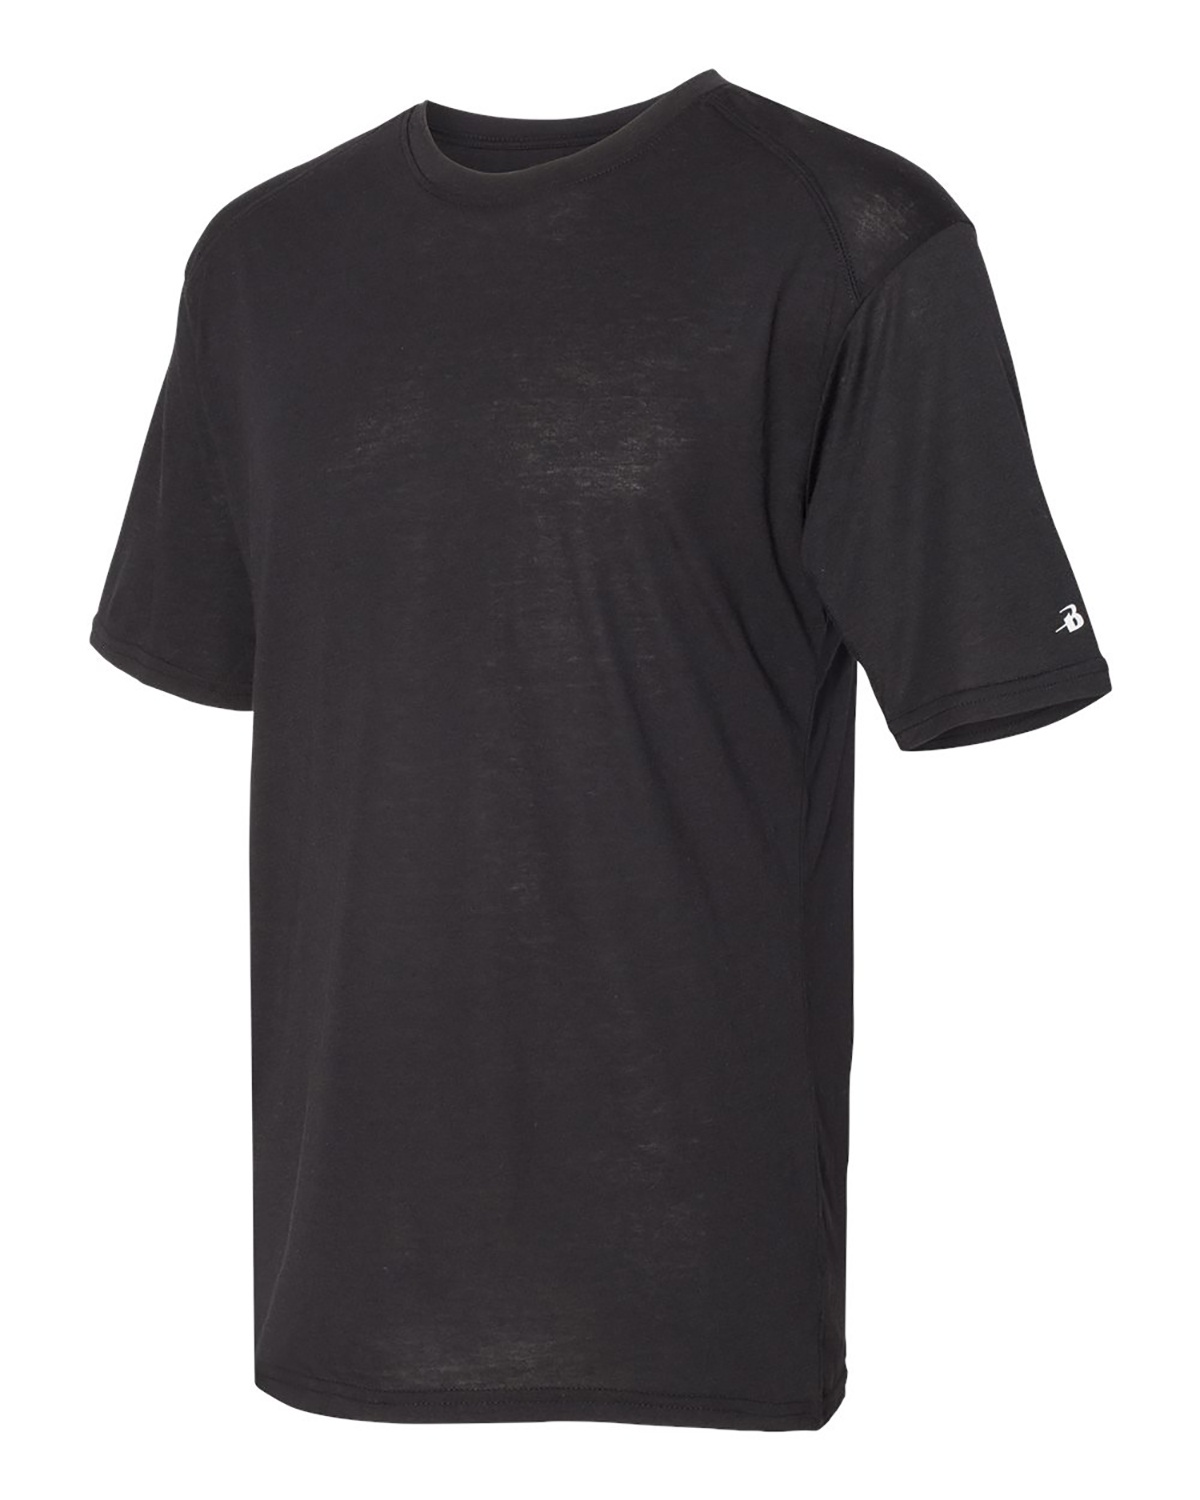 'Badger 4940 Triblend Performance Short Sleeve T-Shirt'